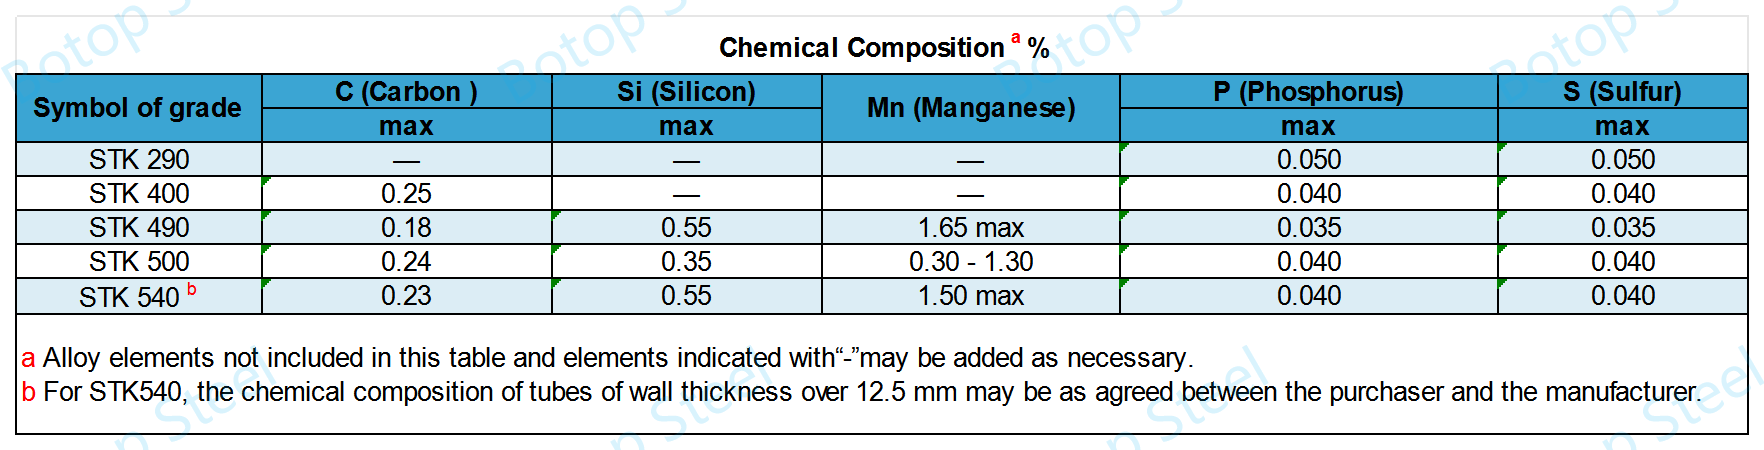 JIS G 3444 Chemical Composition